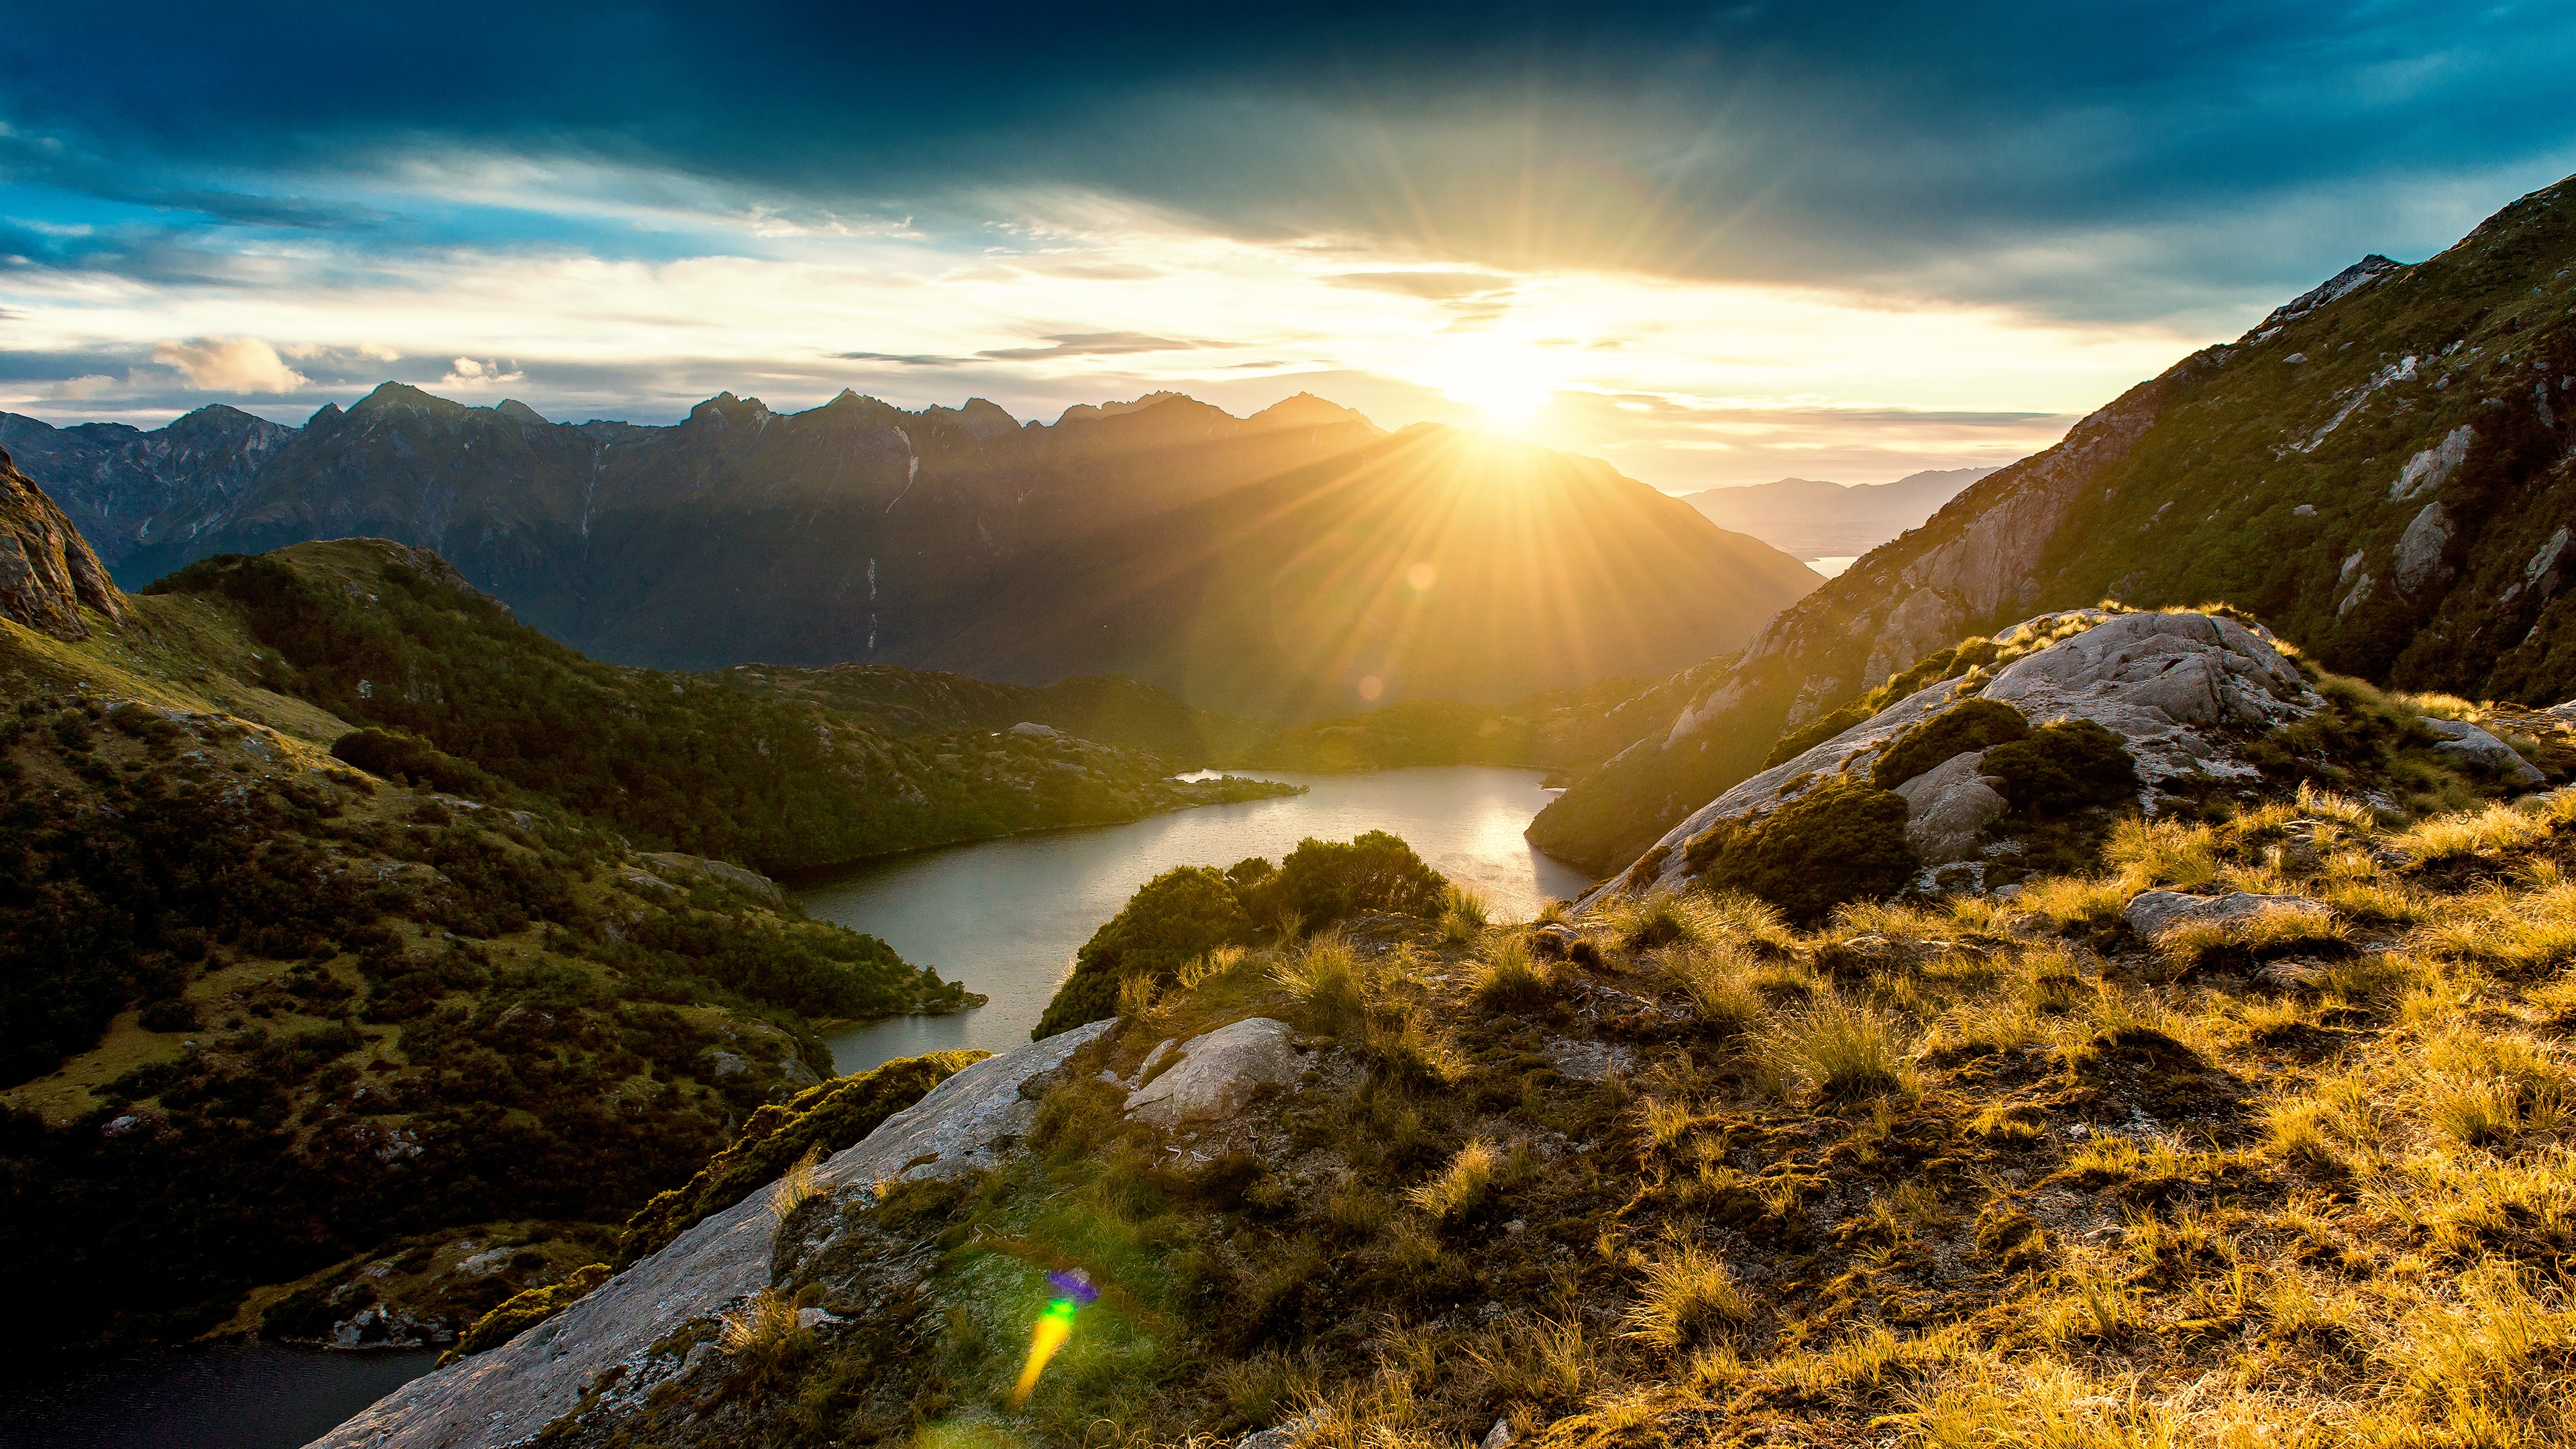 fiordland mountain sunrise 3840 x 2160 23